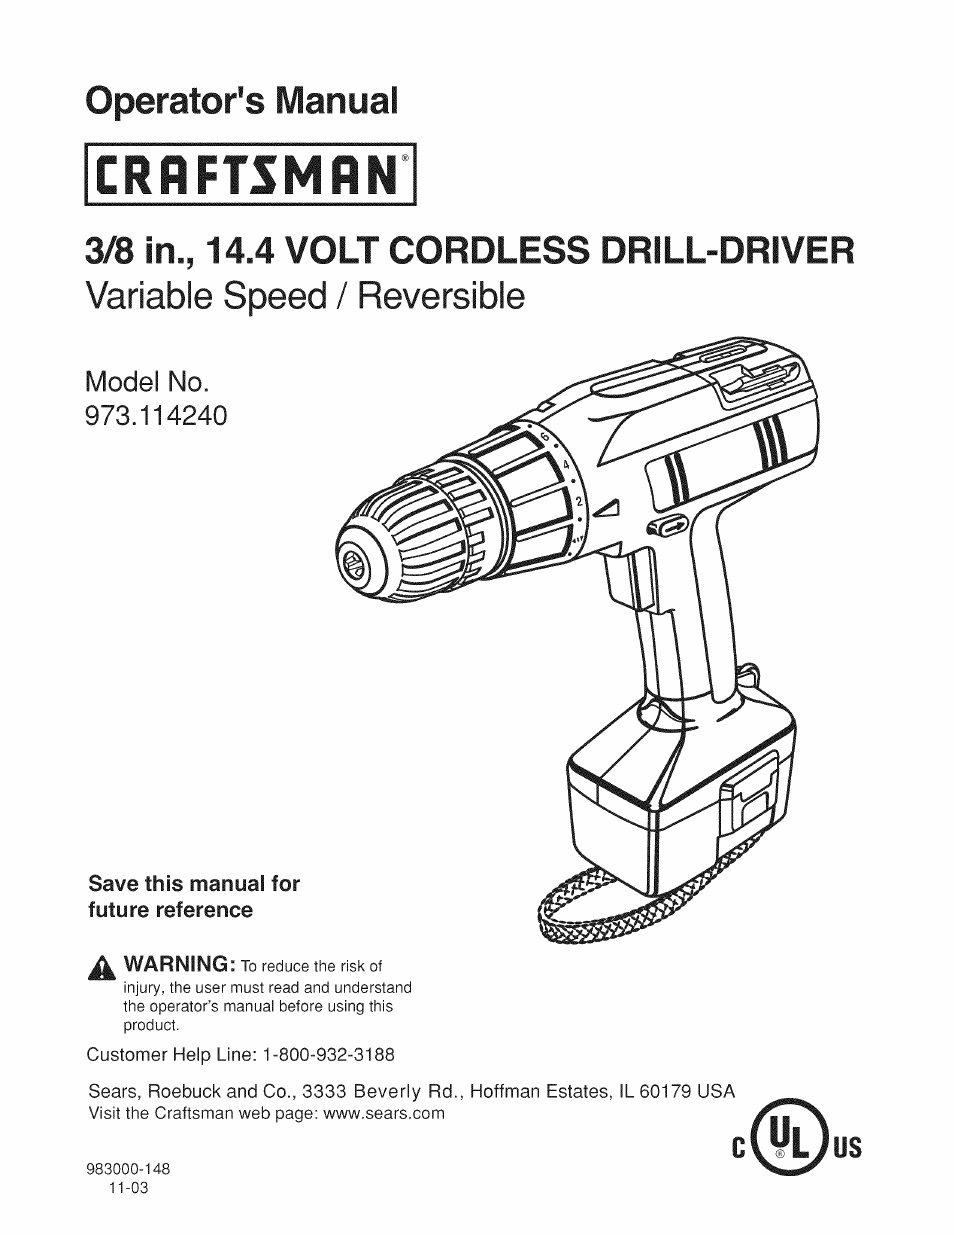 Craftsman 973.114240 User Manual | 18 pages